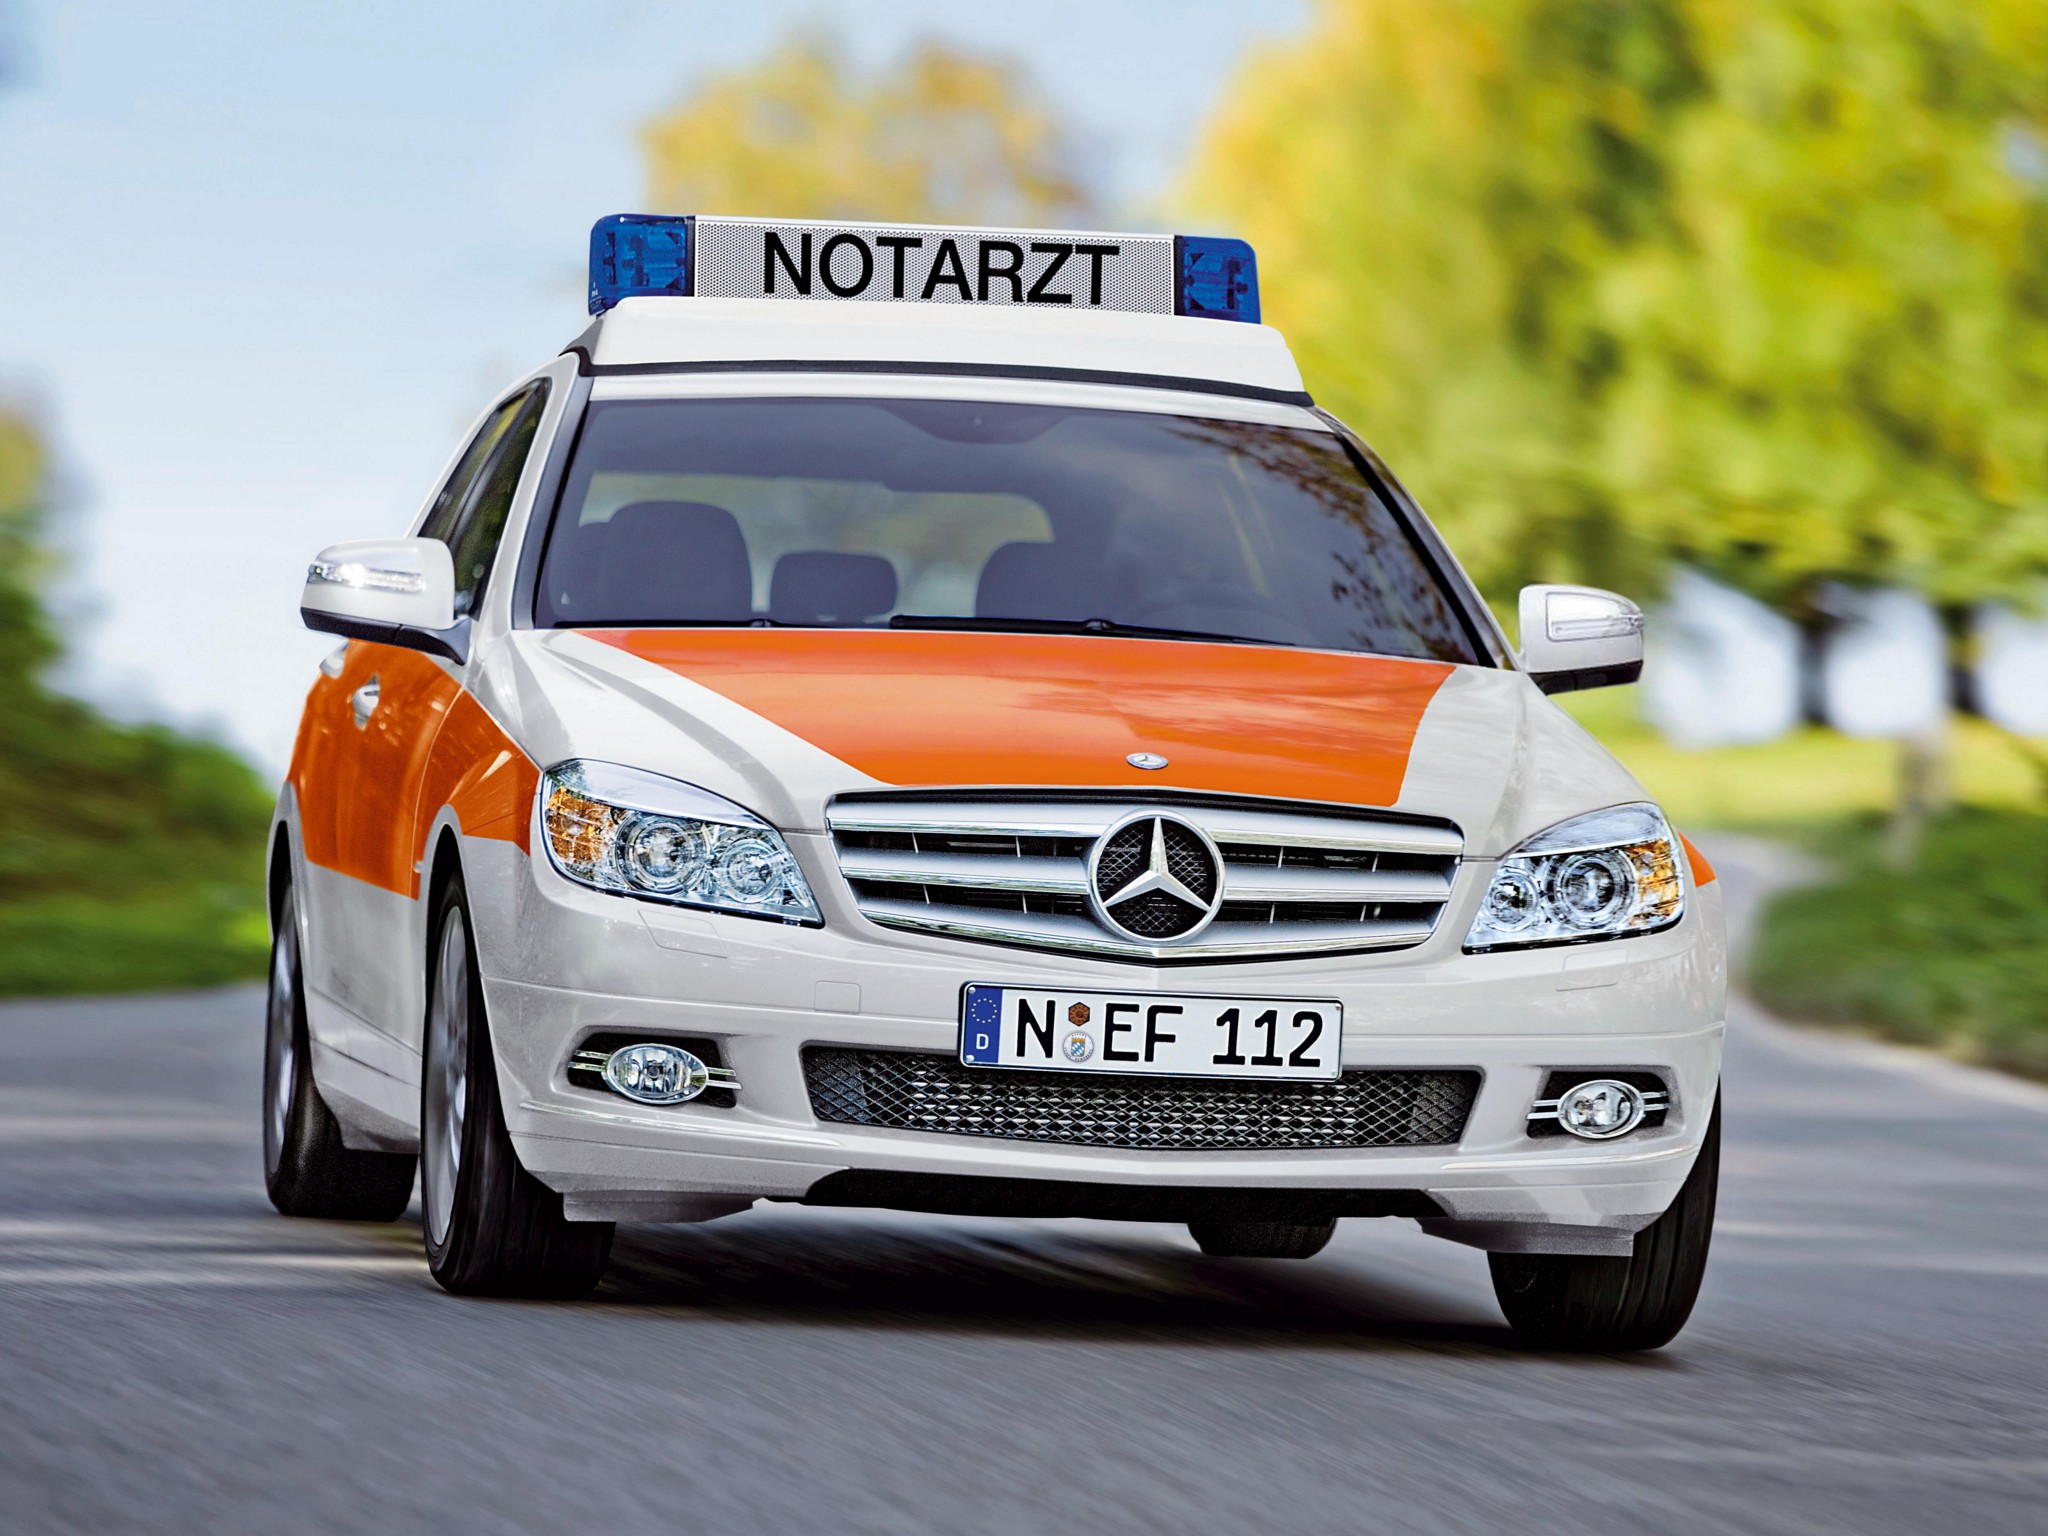 2008, Mercedes, Benz, C klasse, Estate, Notarzt, S204, Emergency, Ambulance Wallpaper